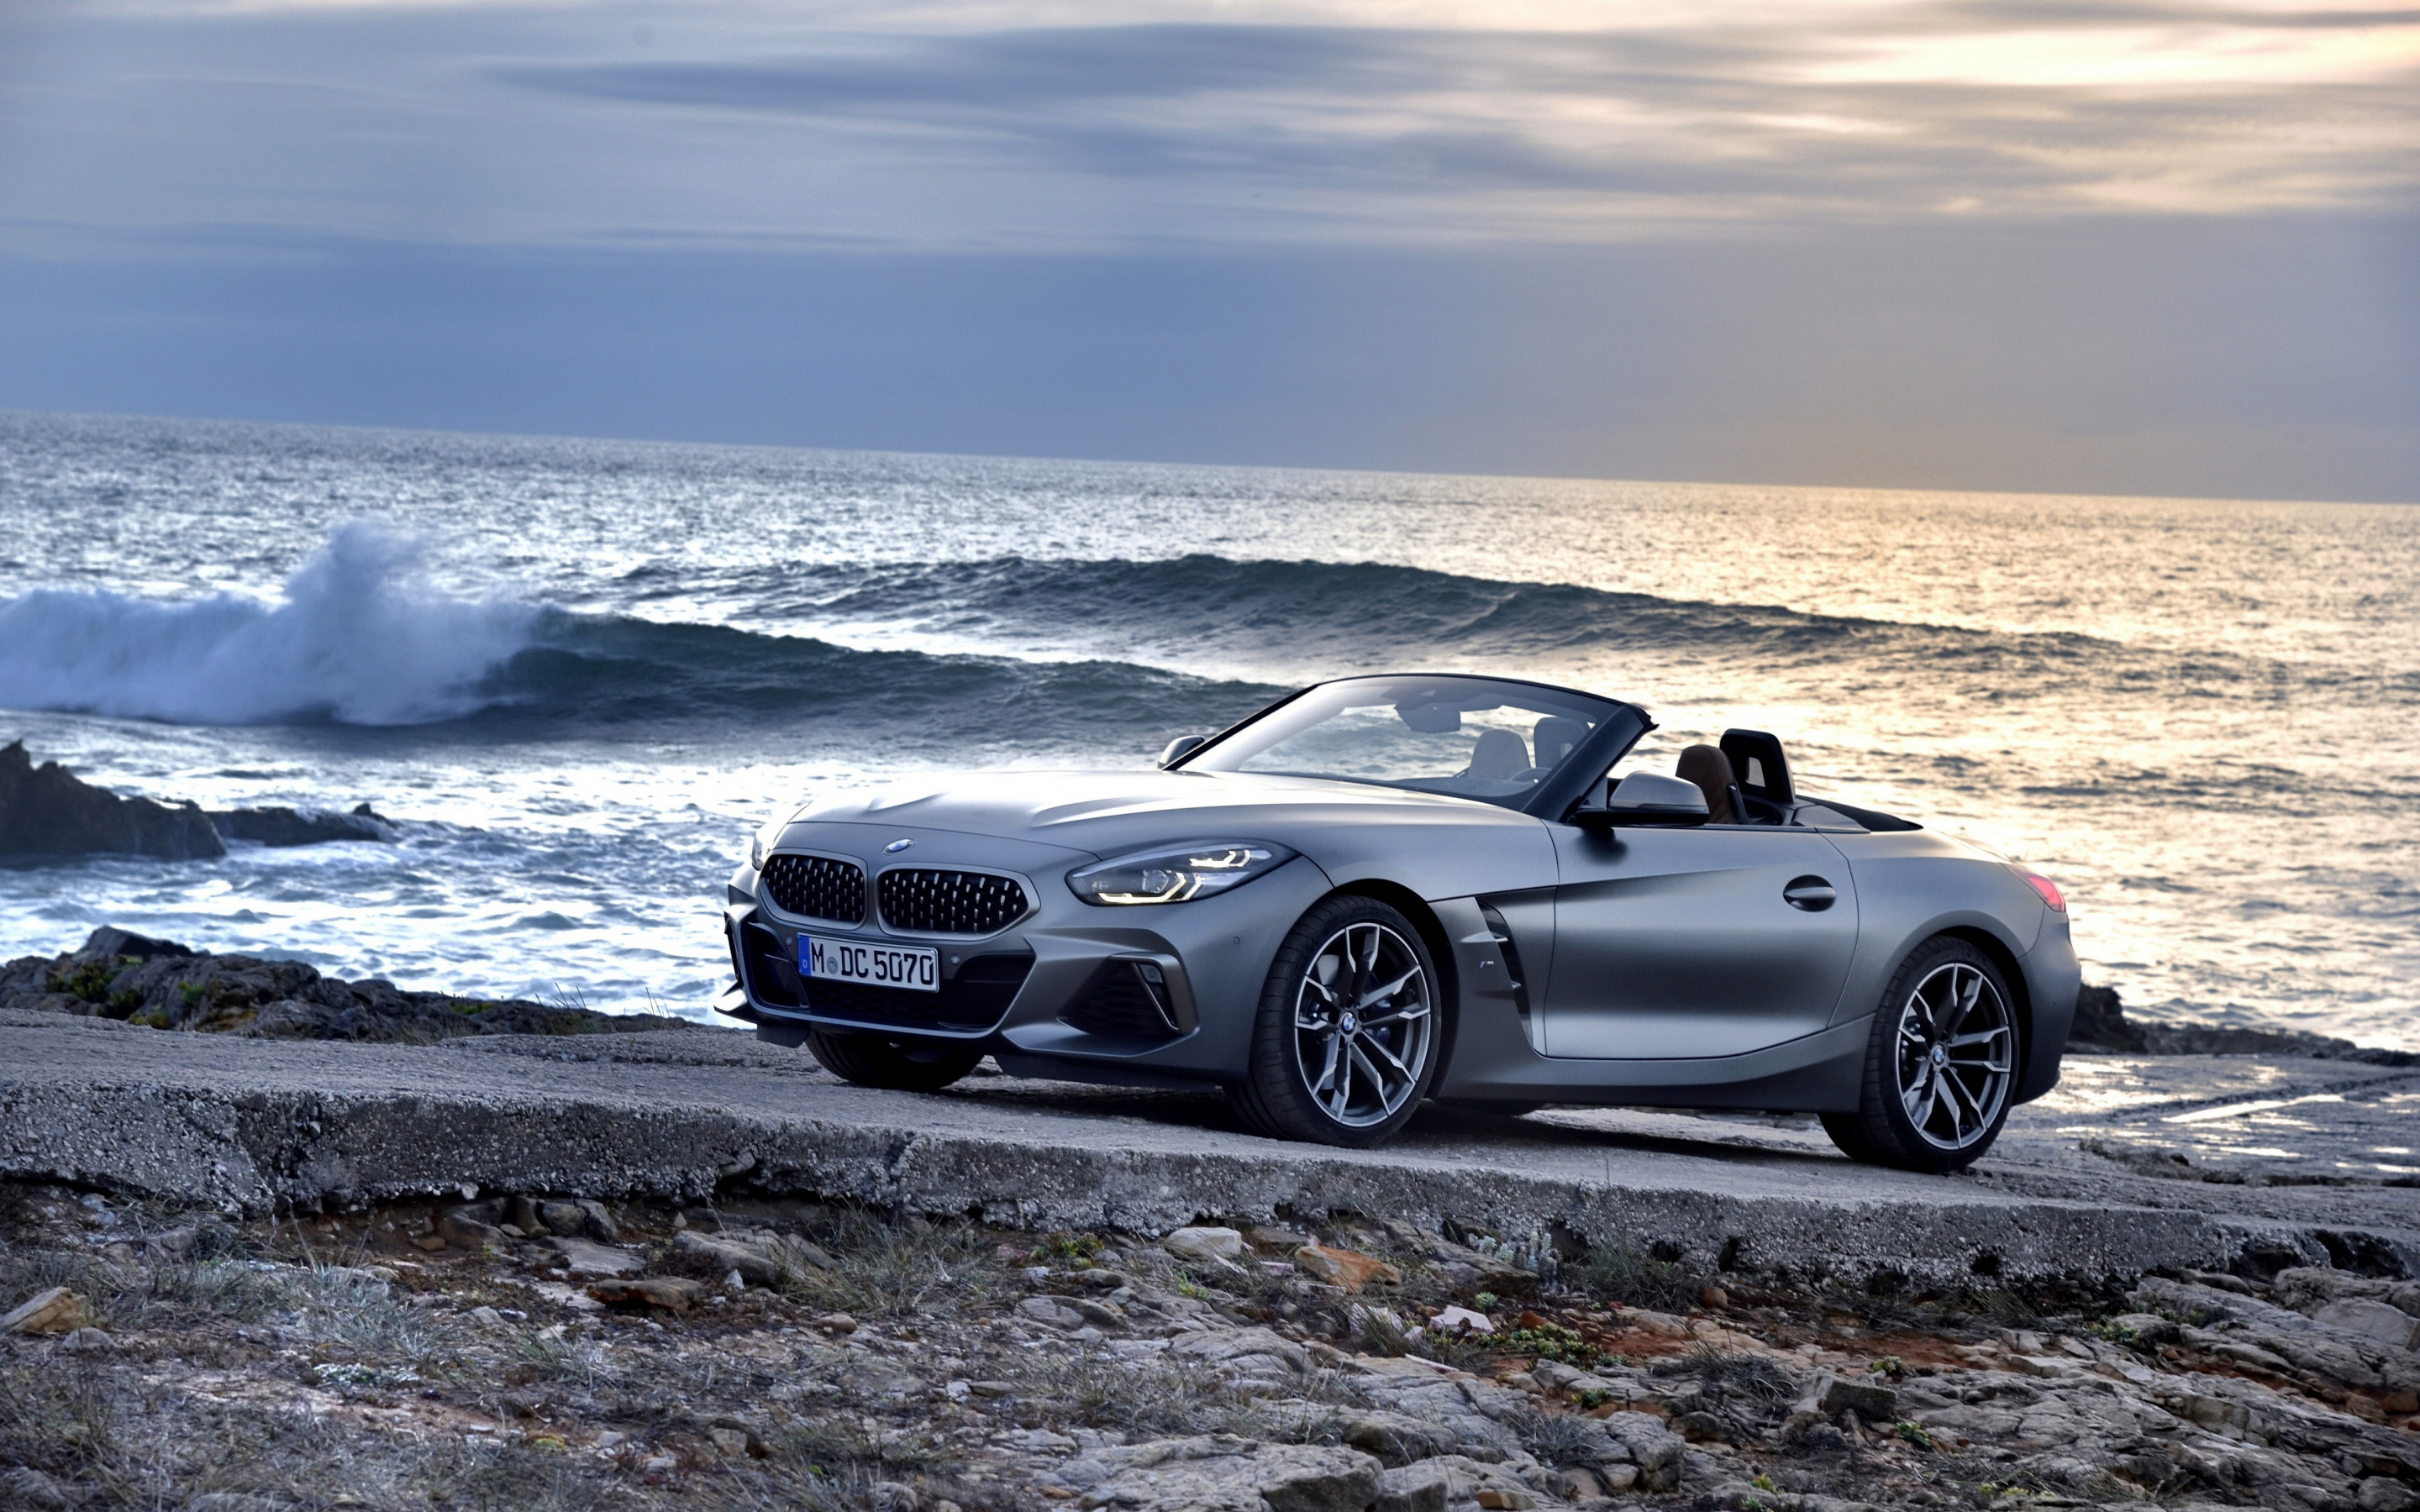 Coast, off-road, BMW Z4, 2880x1800 wallpaper